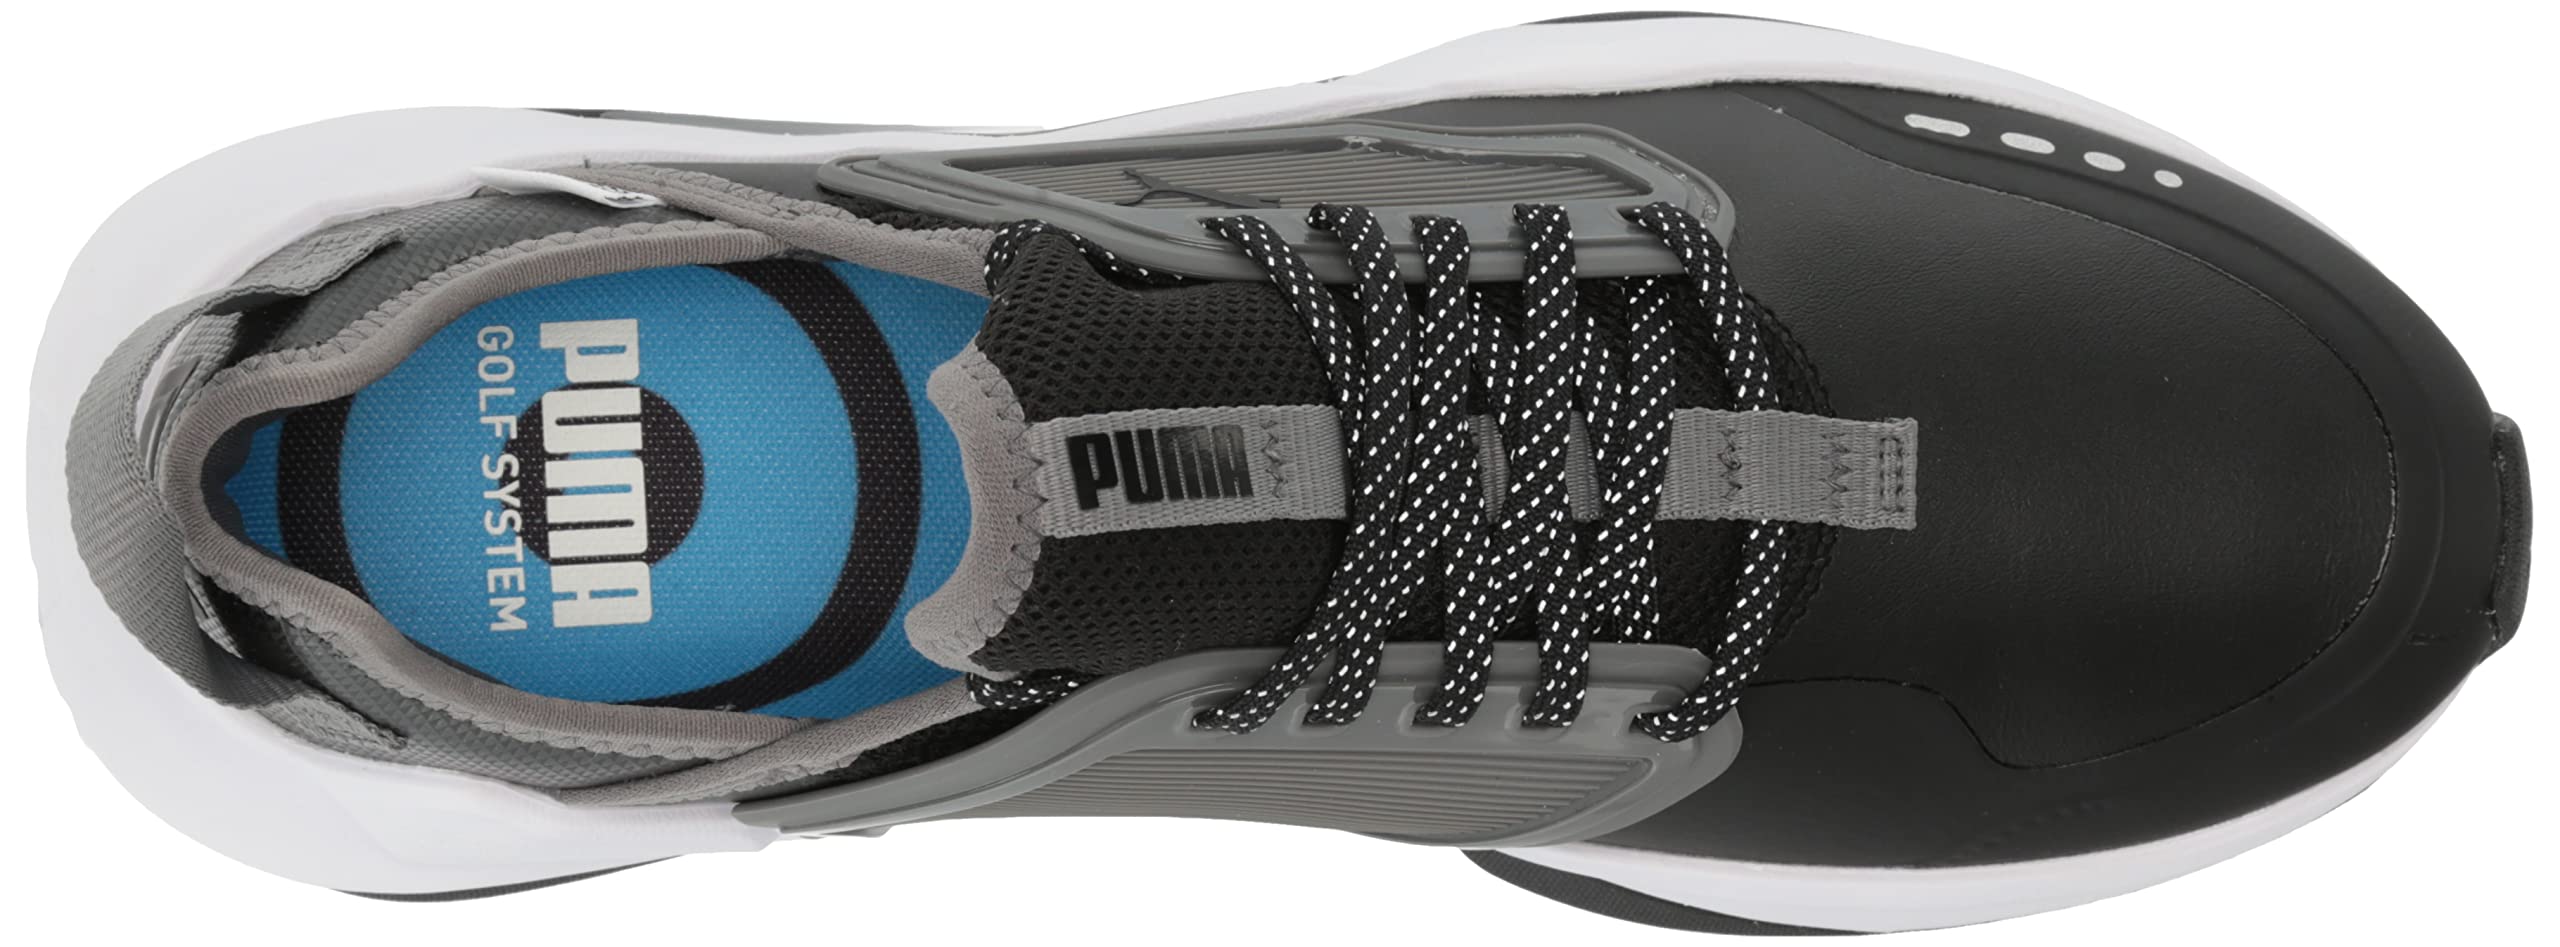 PUMA Unisex-Child Gs.one Golf Shoe